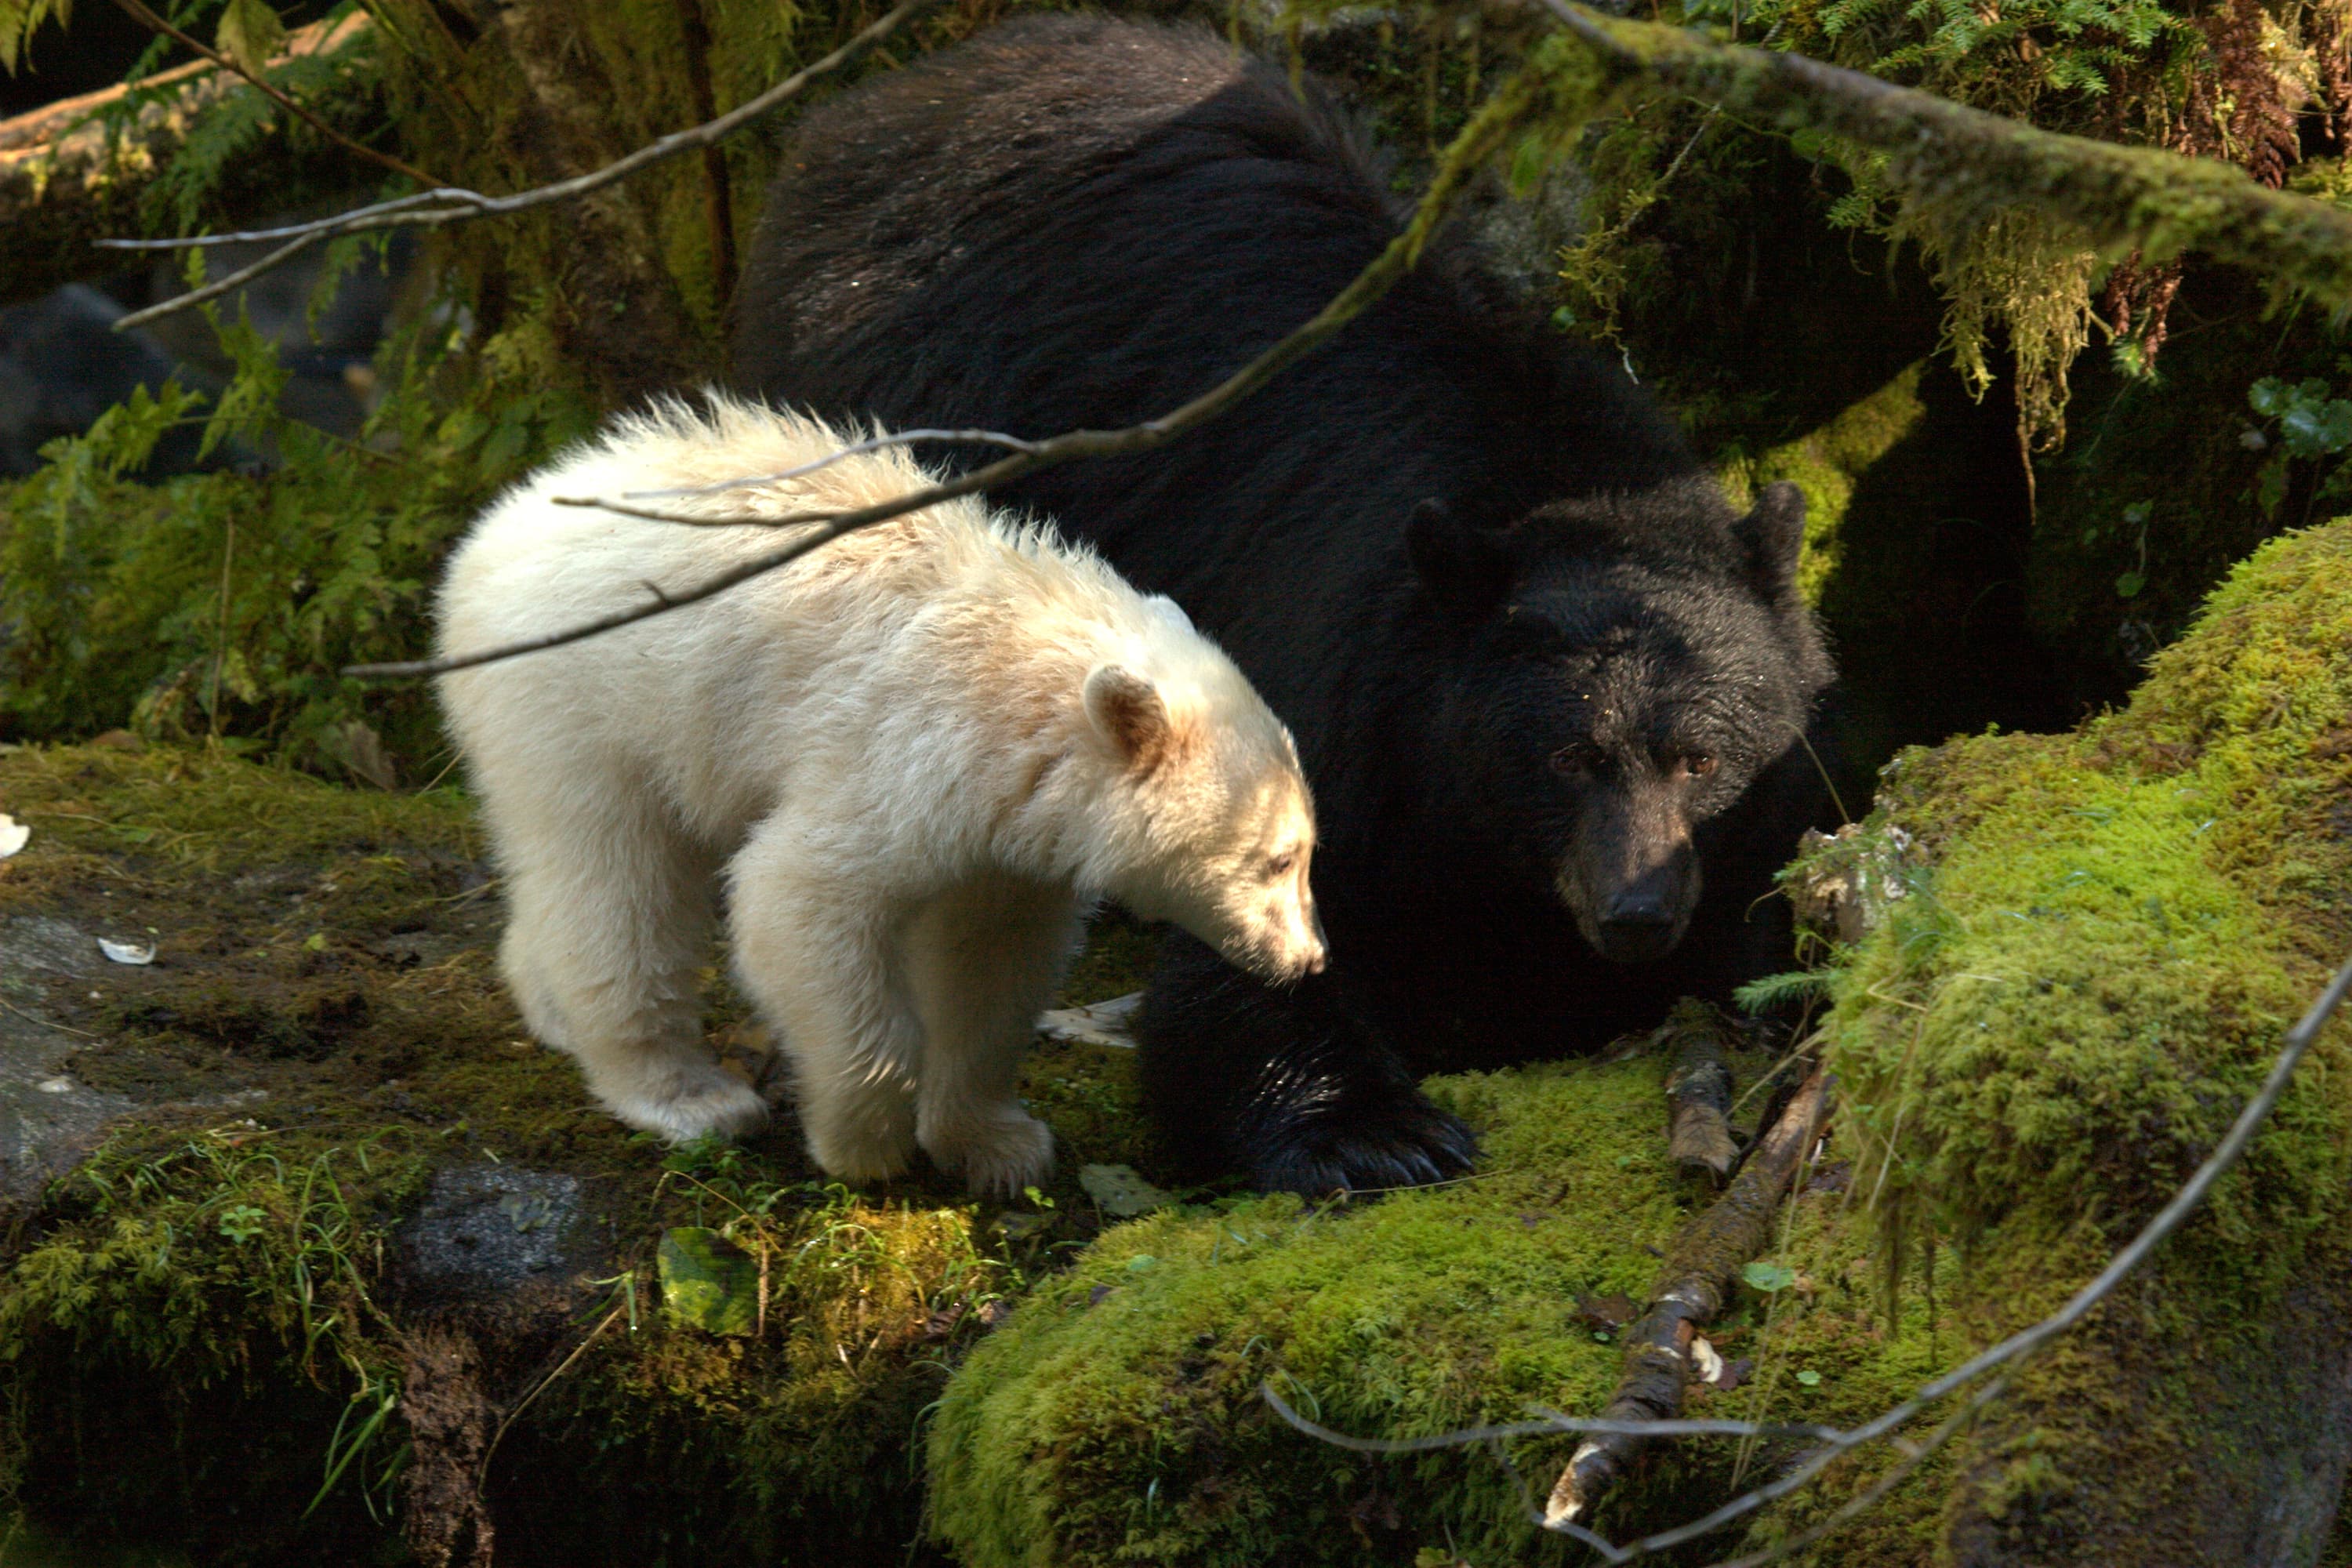 A kermode bear in the wild. (Photo by Doug Neasloss)